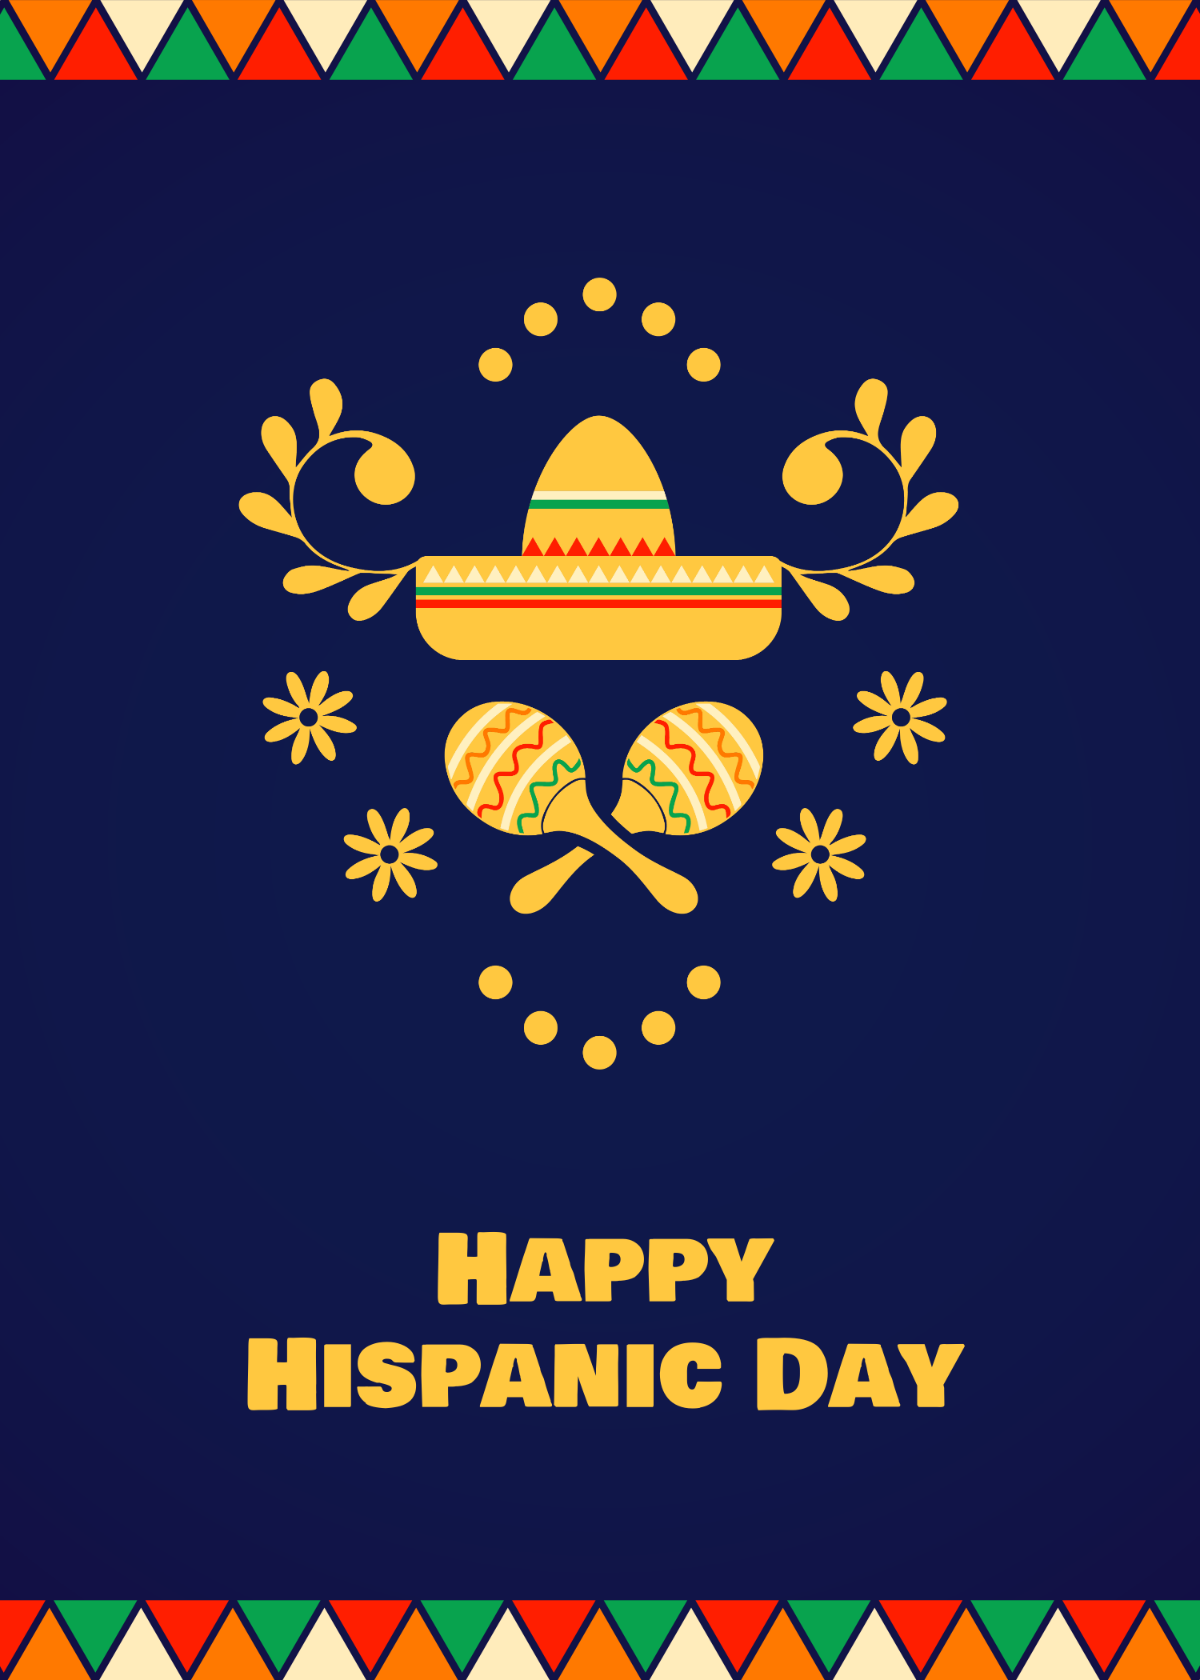 Free Hispanic Day Greeting Card Template